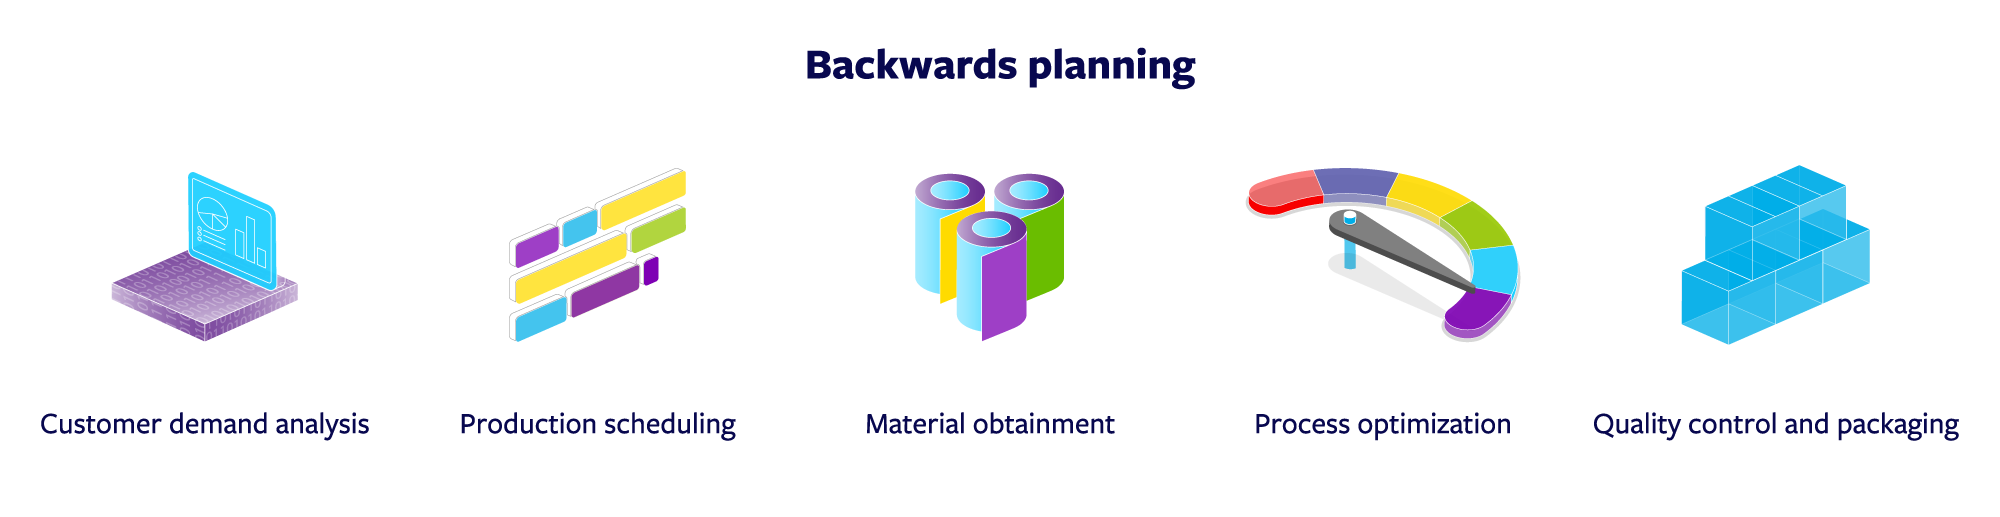 backwards-planning